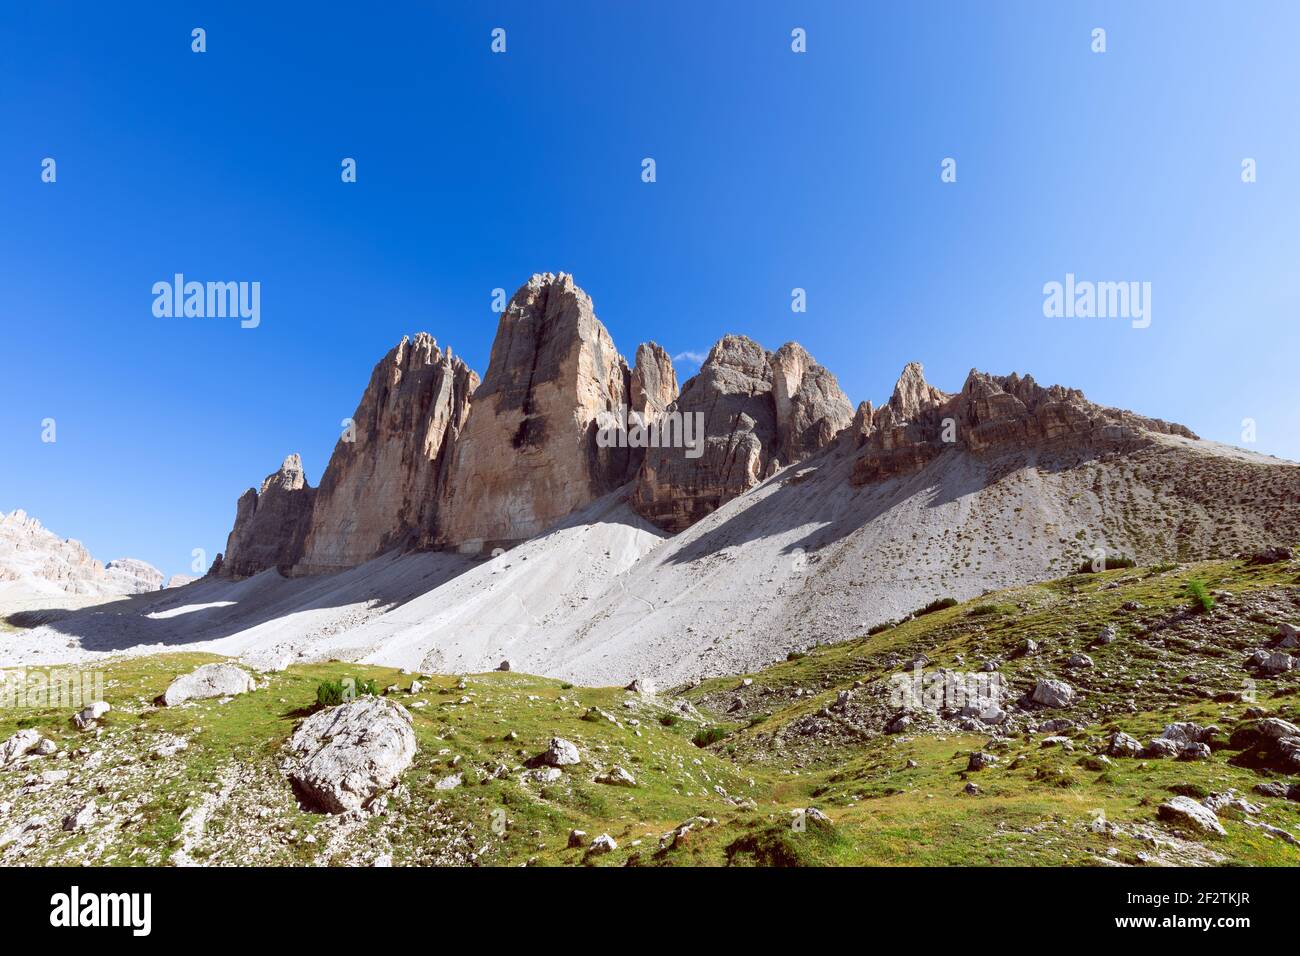 Atemberaubende Aussicht in der Nähe der berühmten Tre Cime di Lavaredo. Südtirol, Italien Stockfoto